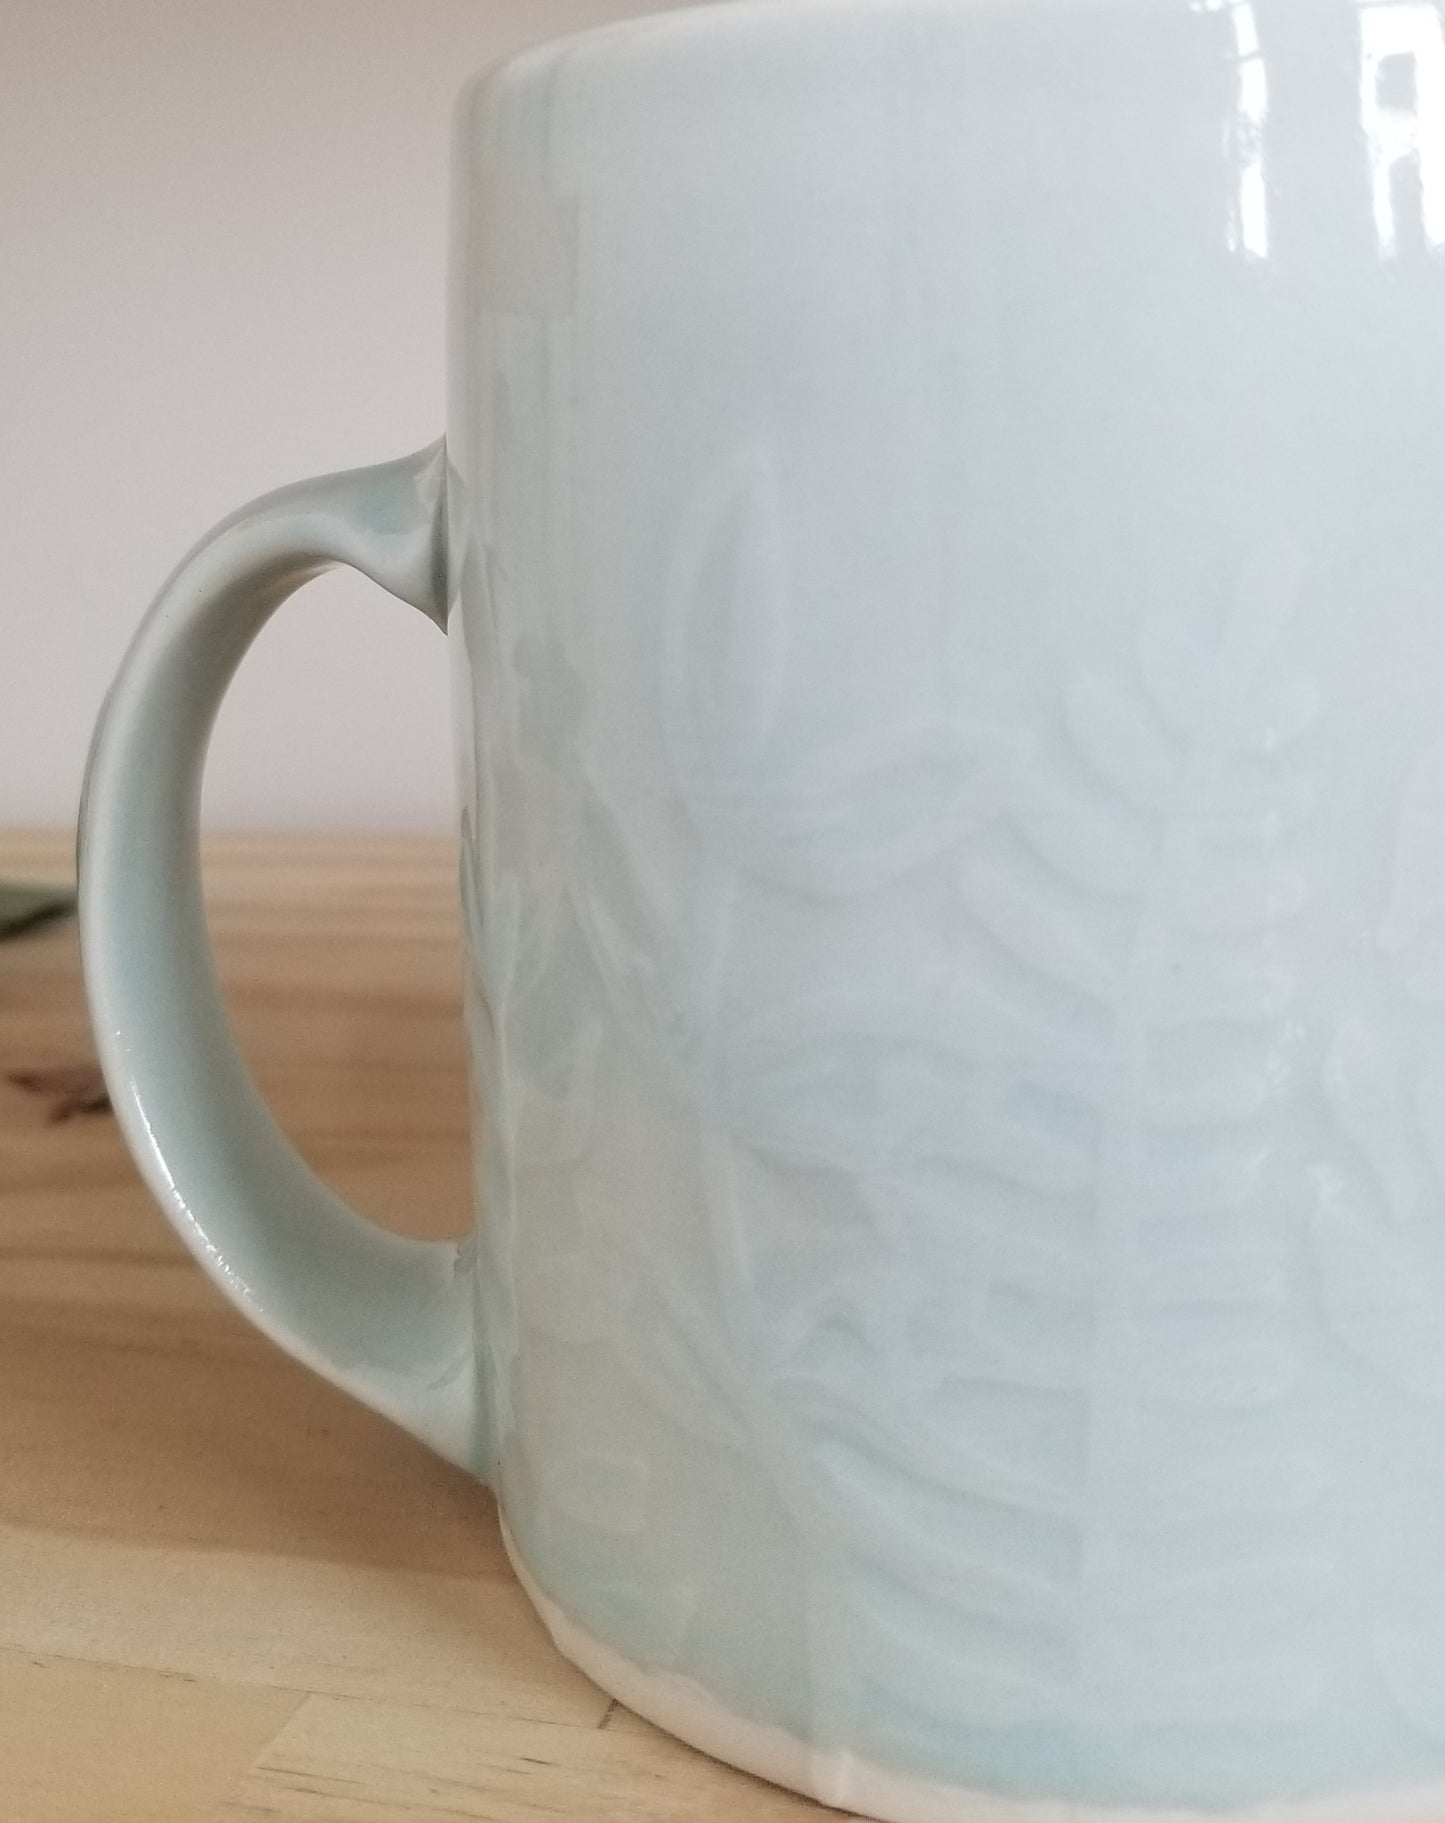 Porcelain Embossed Mugs